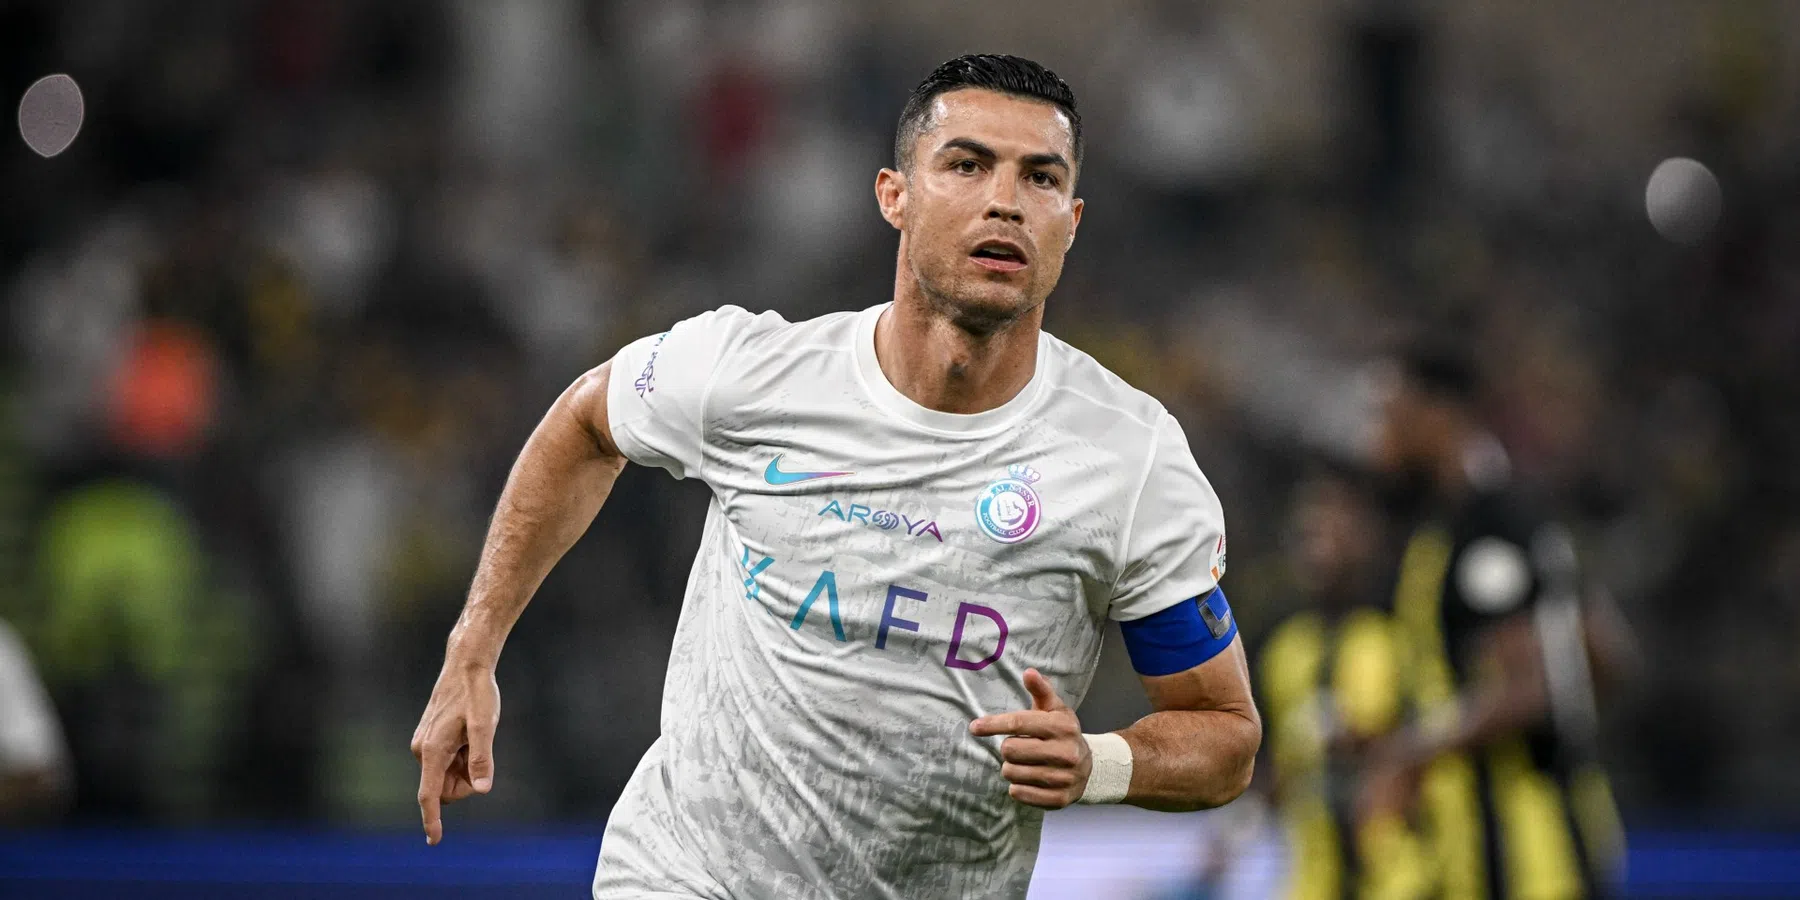 Cristiano Ronaldo nuchter na bereiken 1000 duels in clubverband